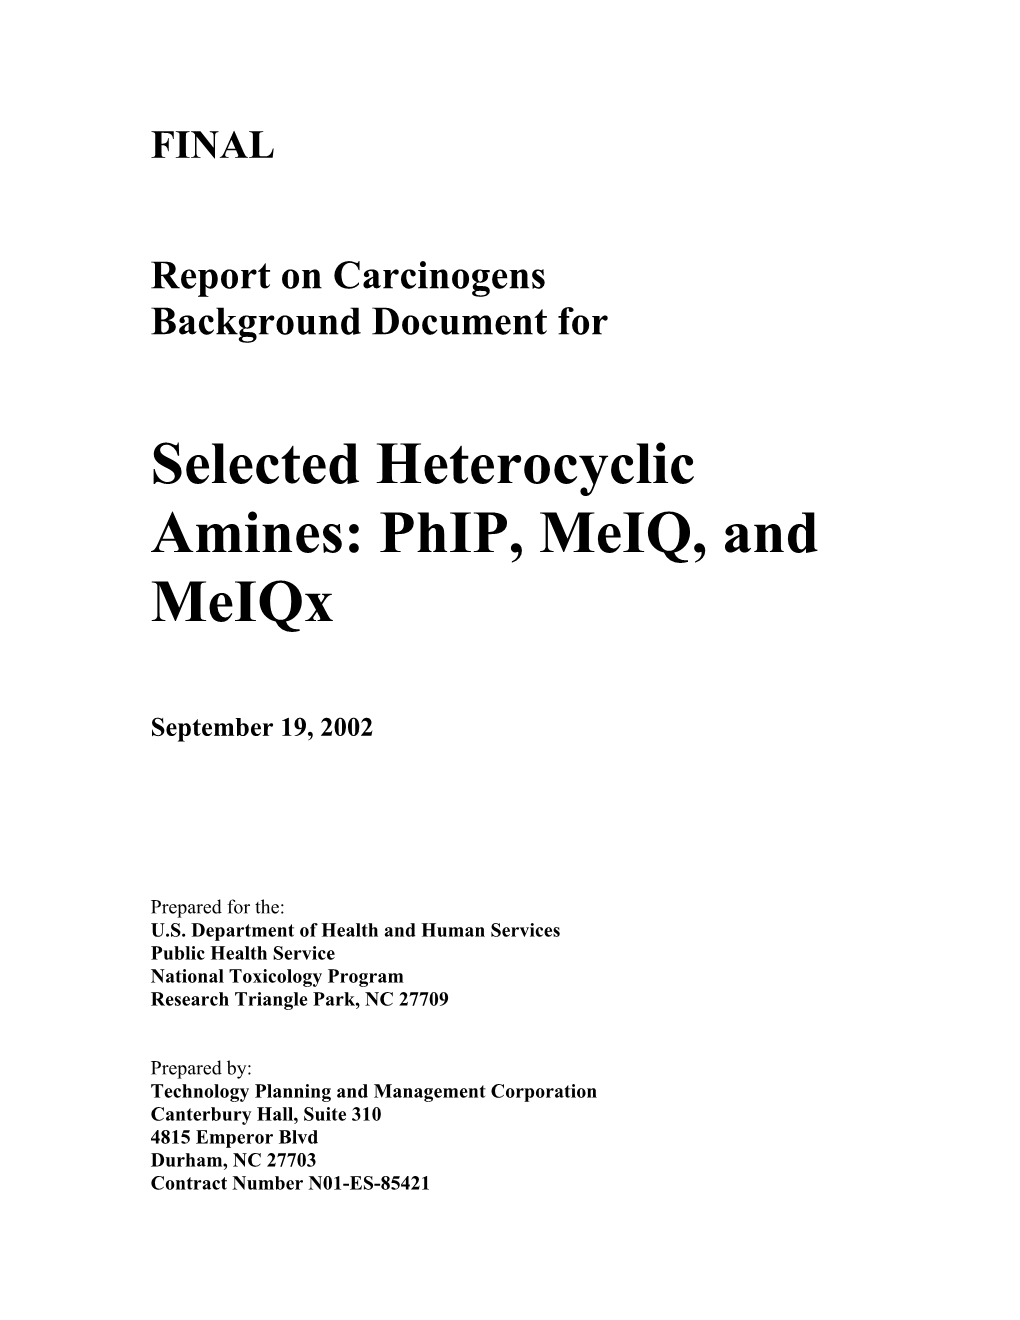 Selected Heterocyclic Amines: Phip, Meiq, and Meiqx